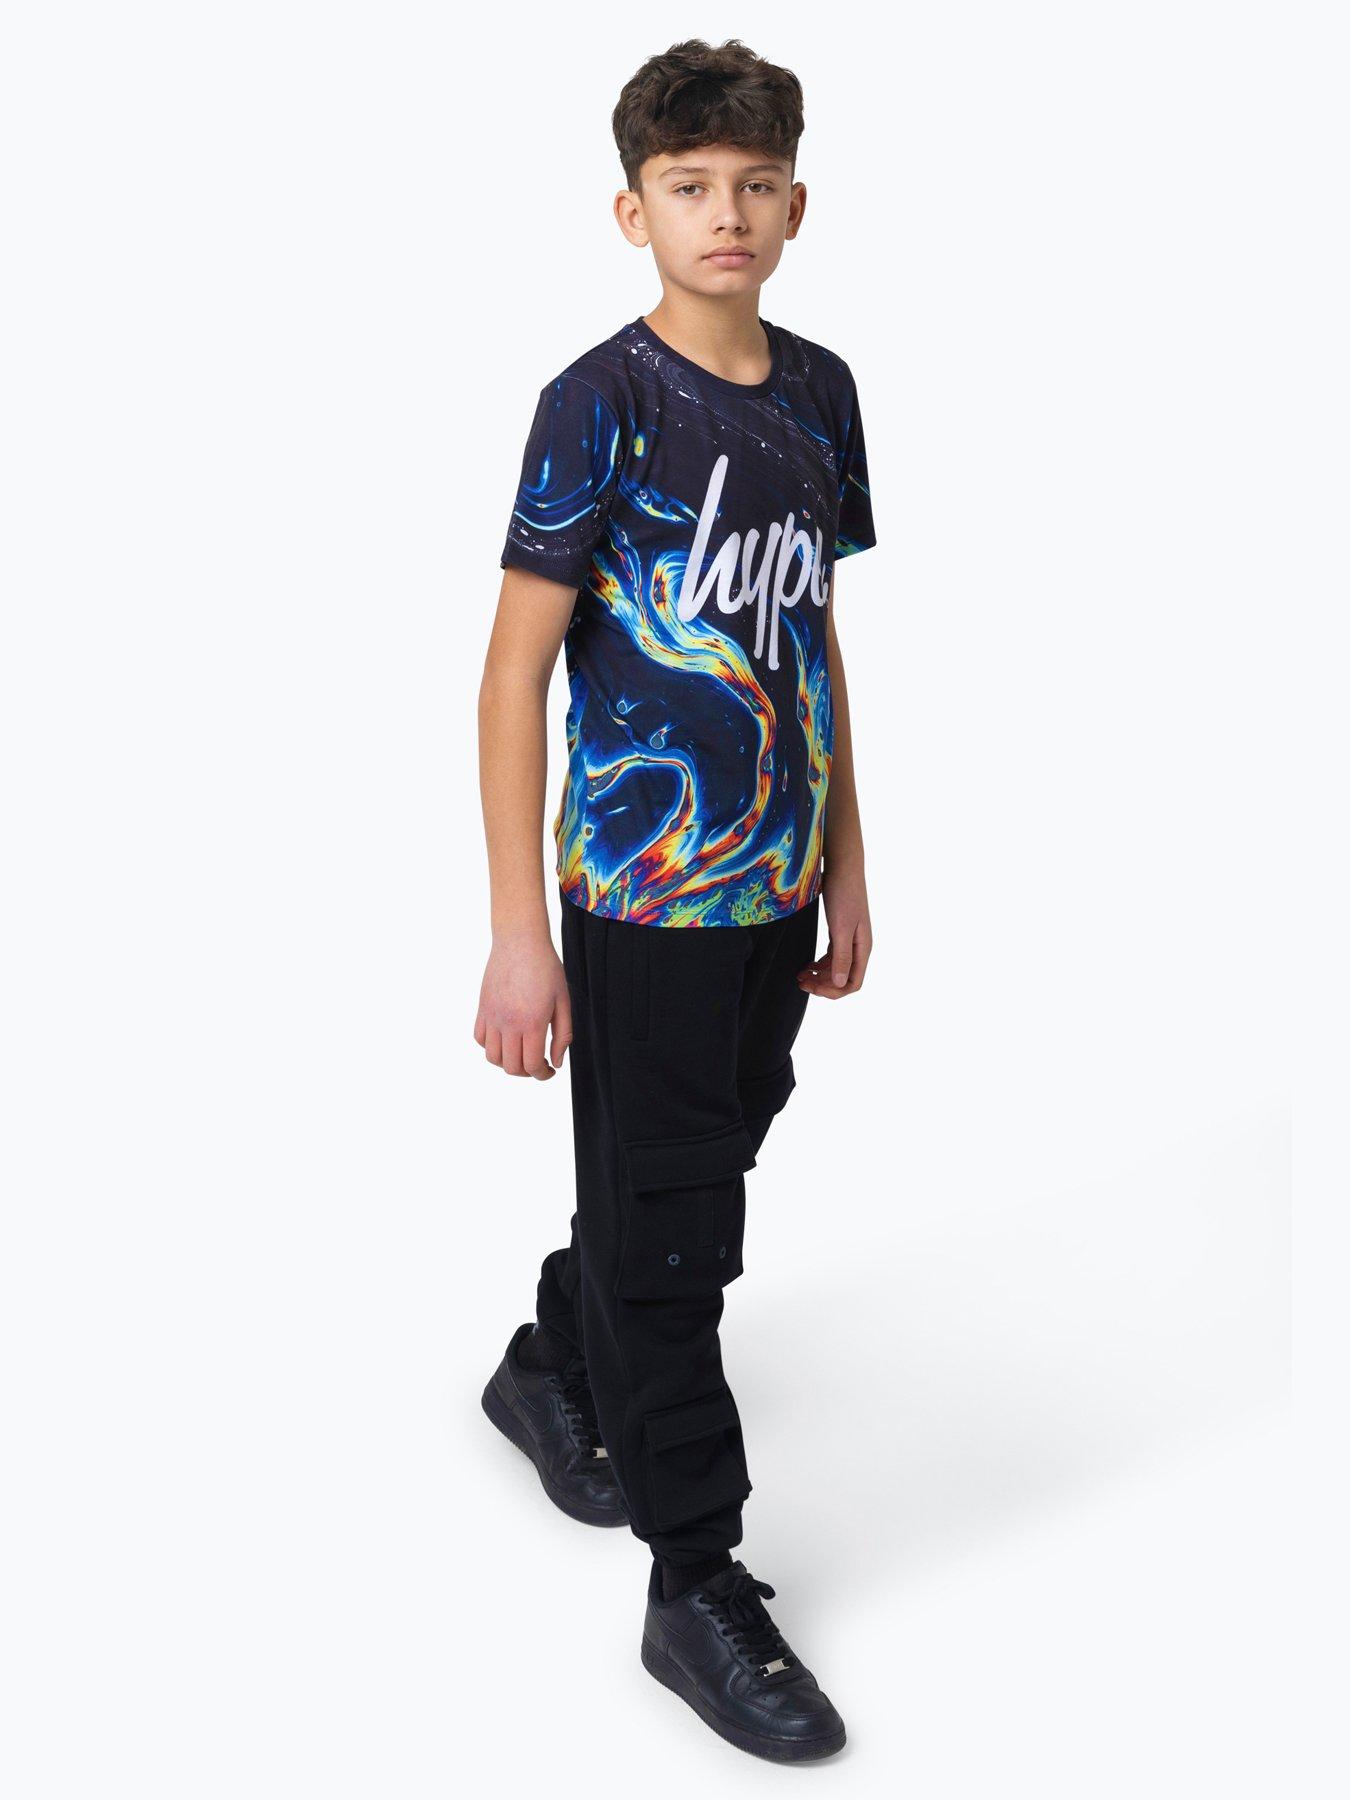  Hype Childrens/Kids T-Shirt And Leggings Set (5-6